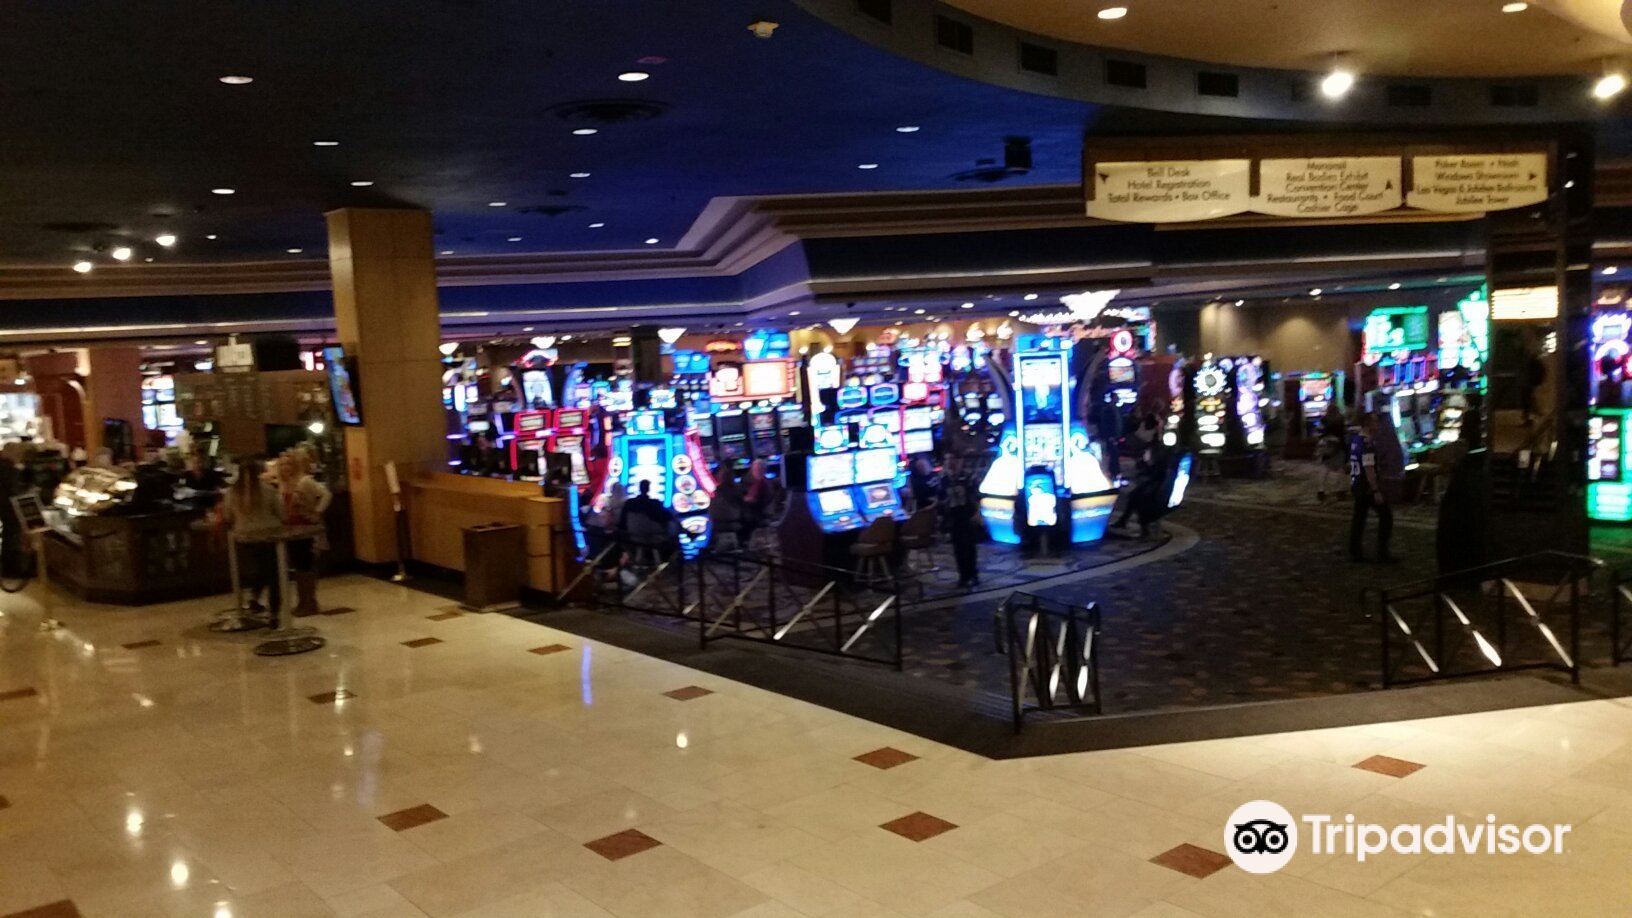 Bally's Hotel Las Vegas, Casino floor tour. 